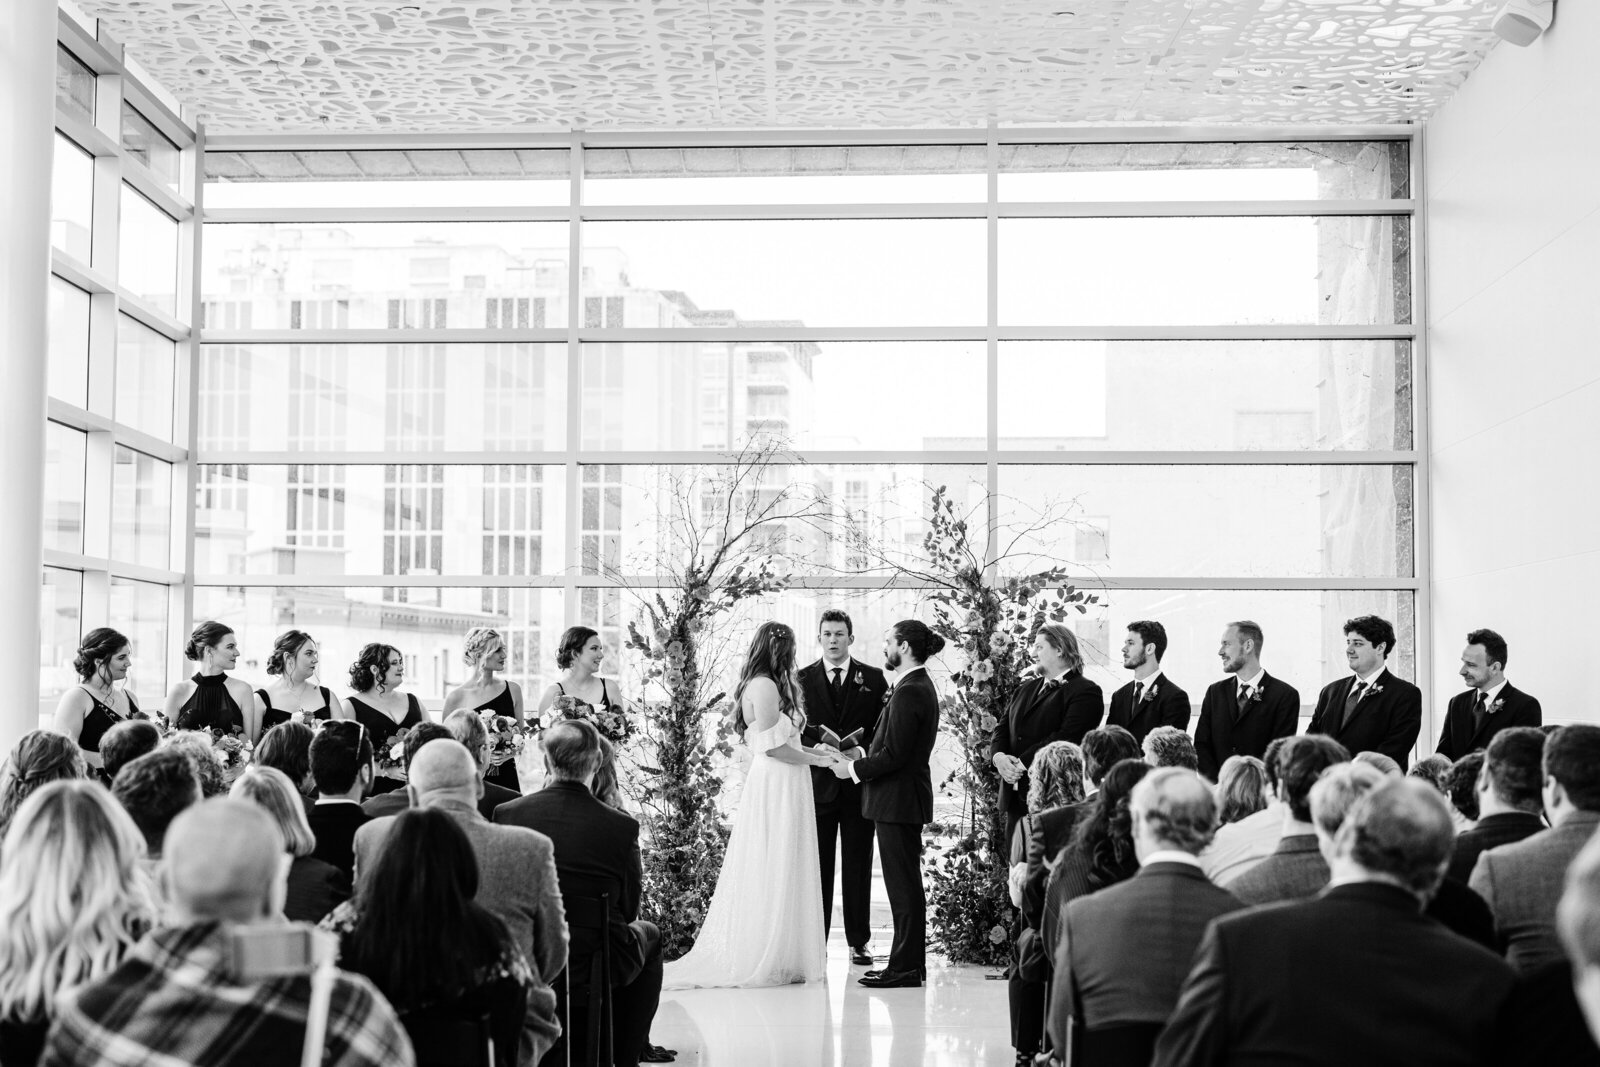 Madison Public Library wedding ceremony